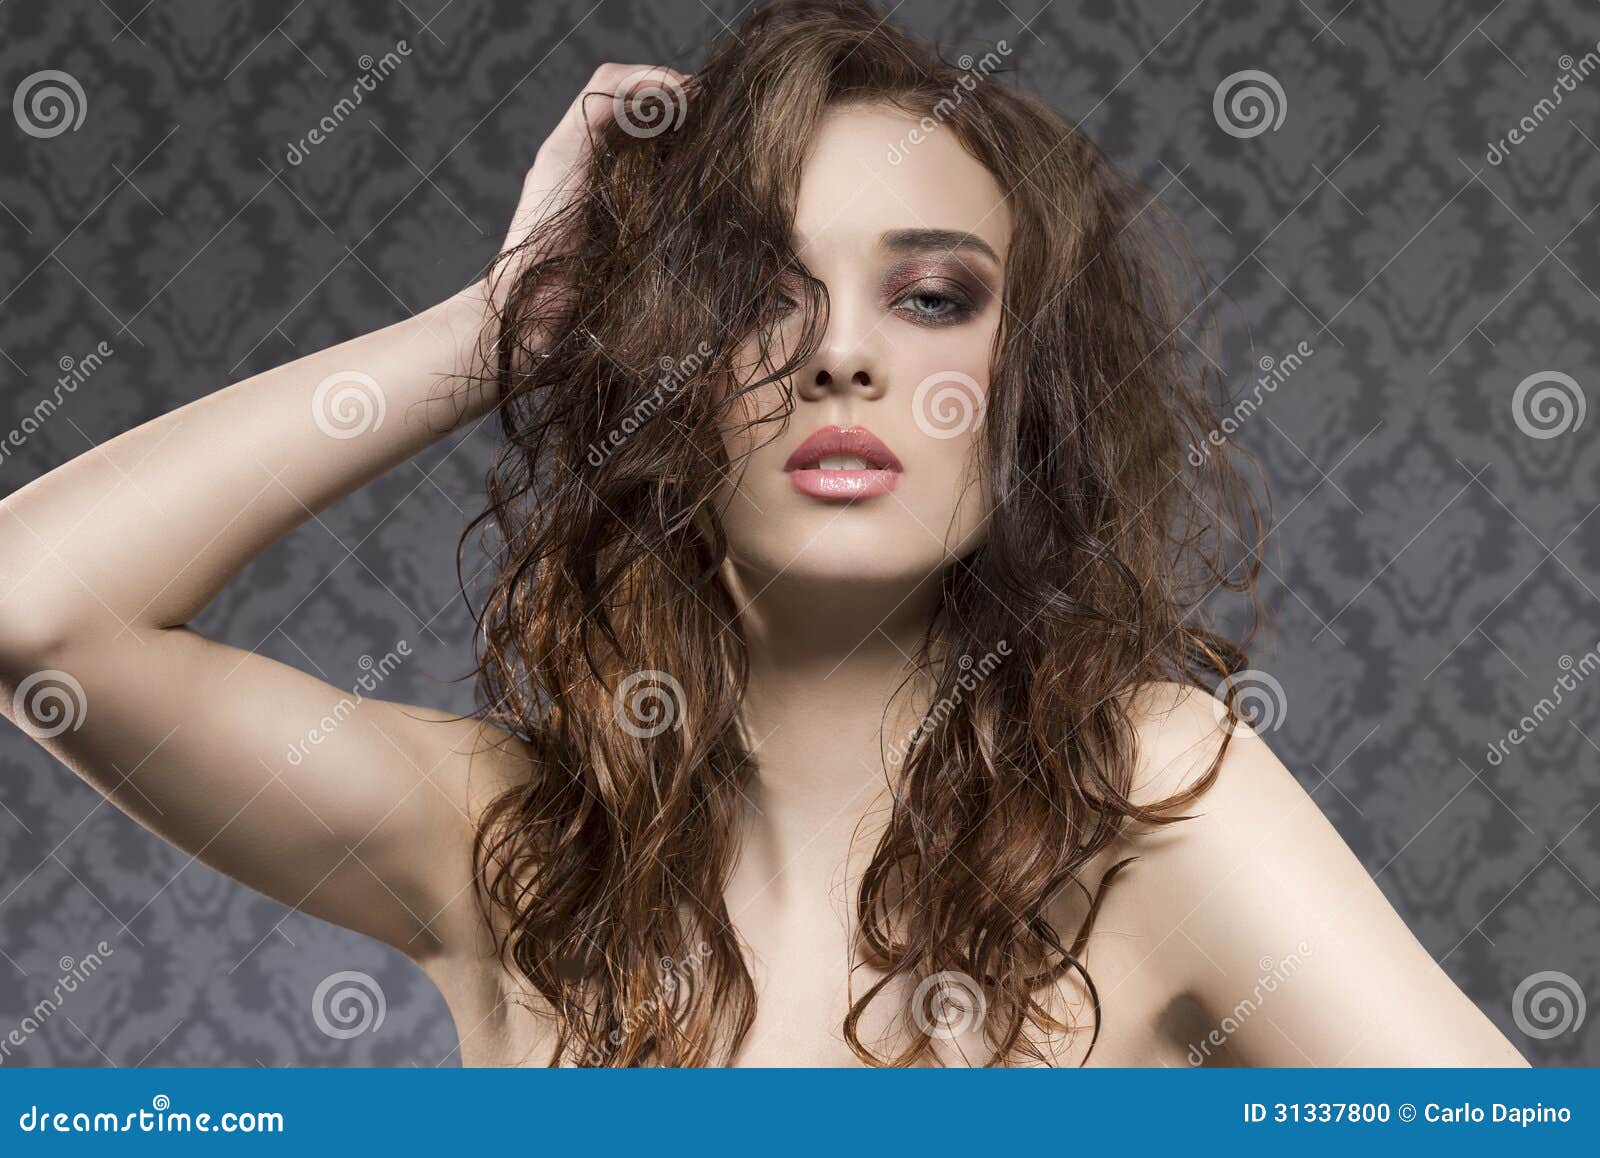 curly hair women Hot